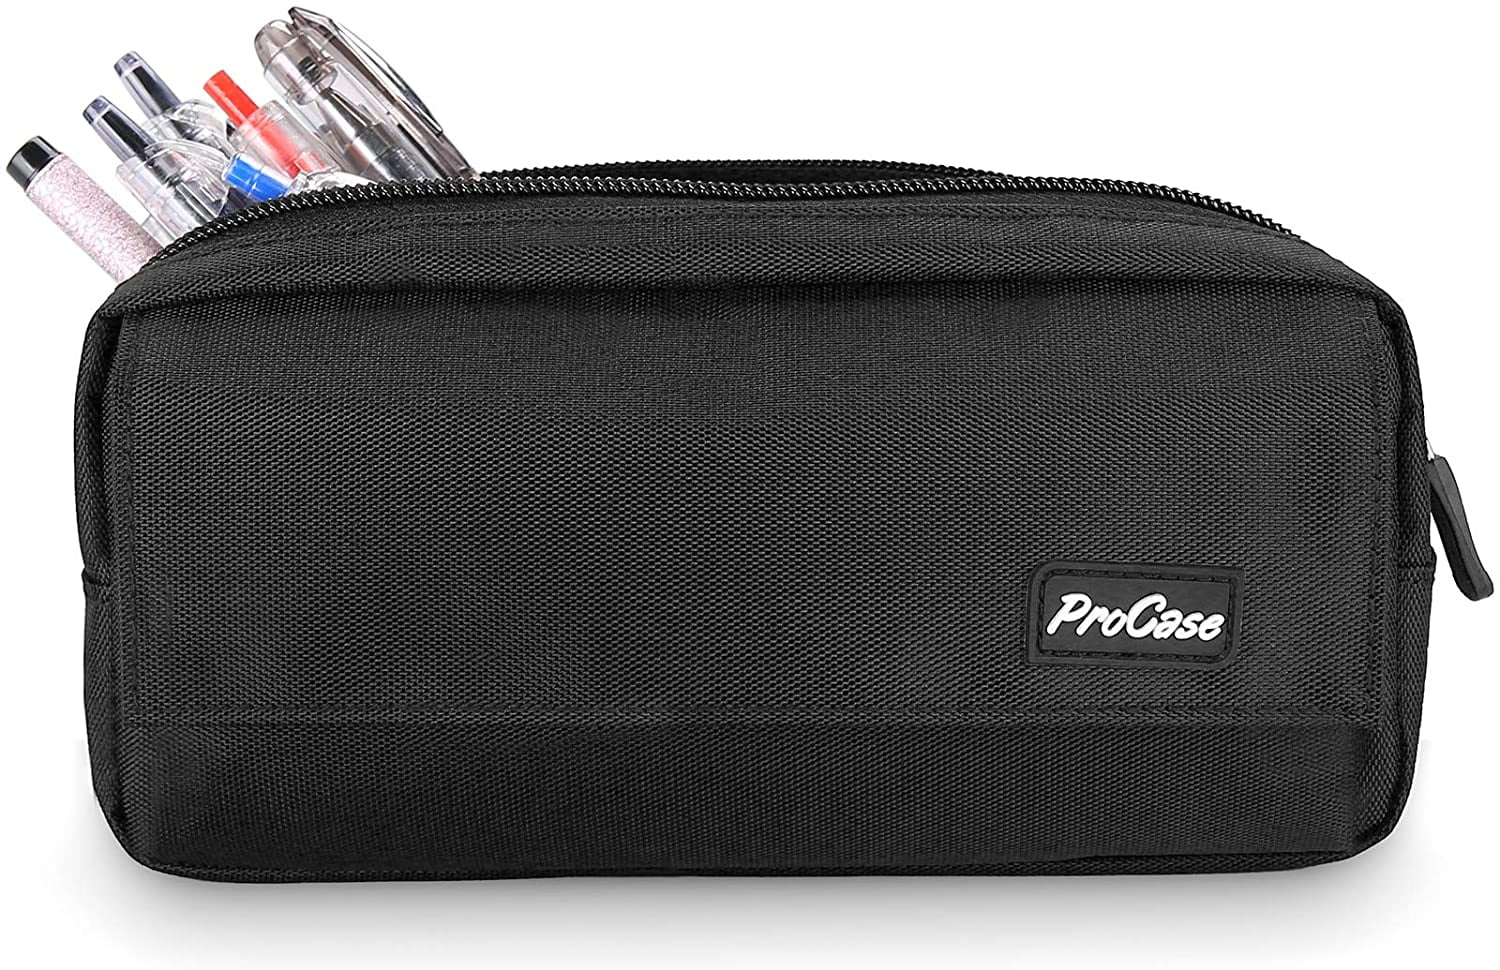 Pen Pocket Protector, PU Leather Pocket Pen Holder Organizer Pouch